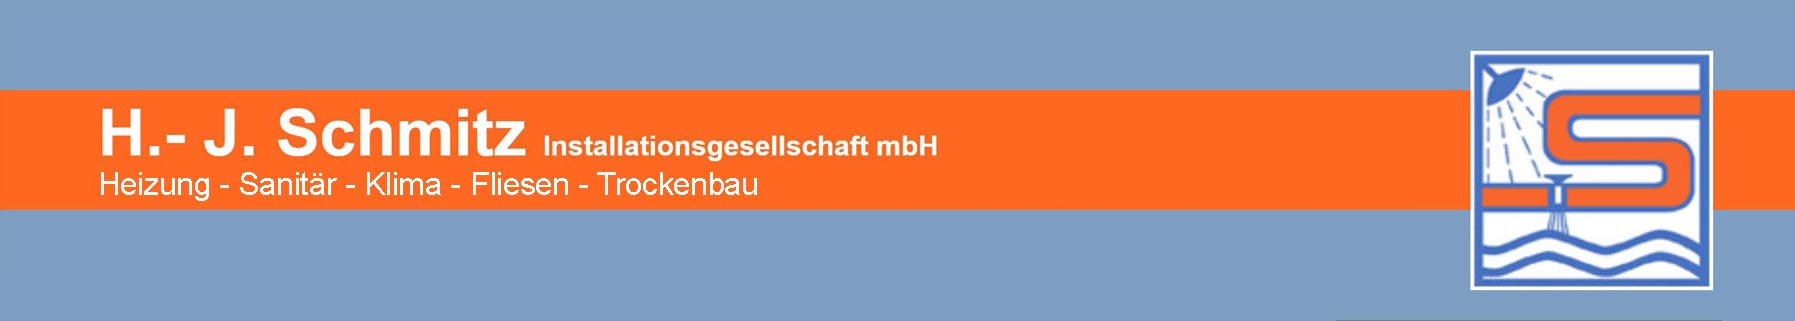 H.-J. Schmitz Installationsgesellschaft mbH